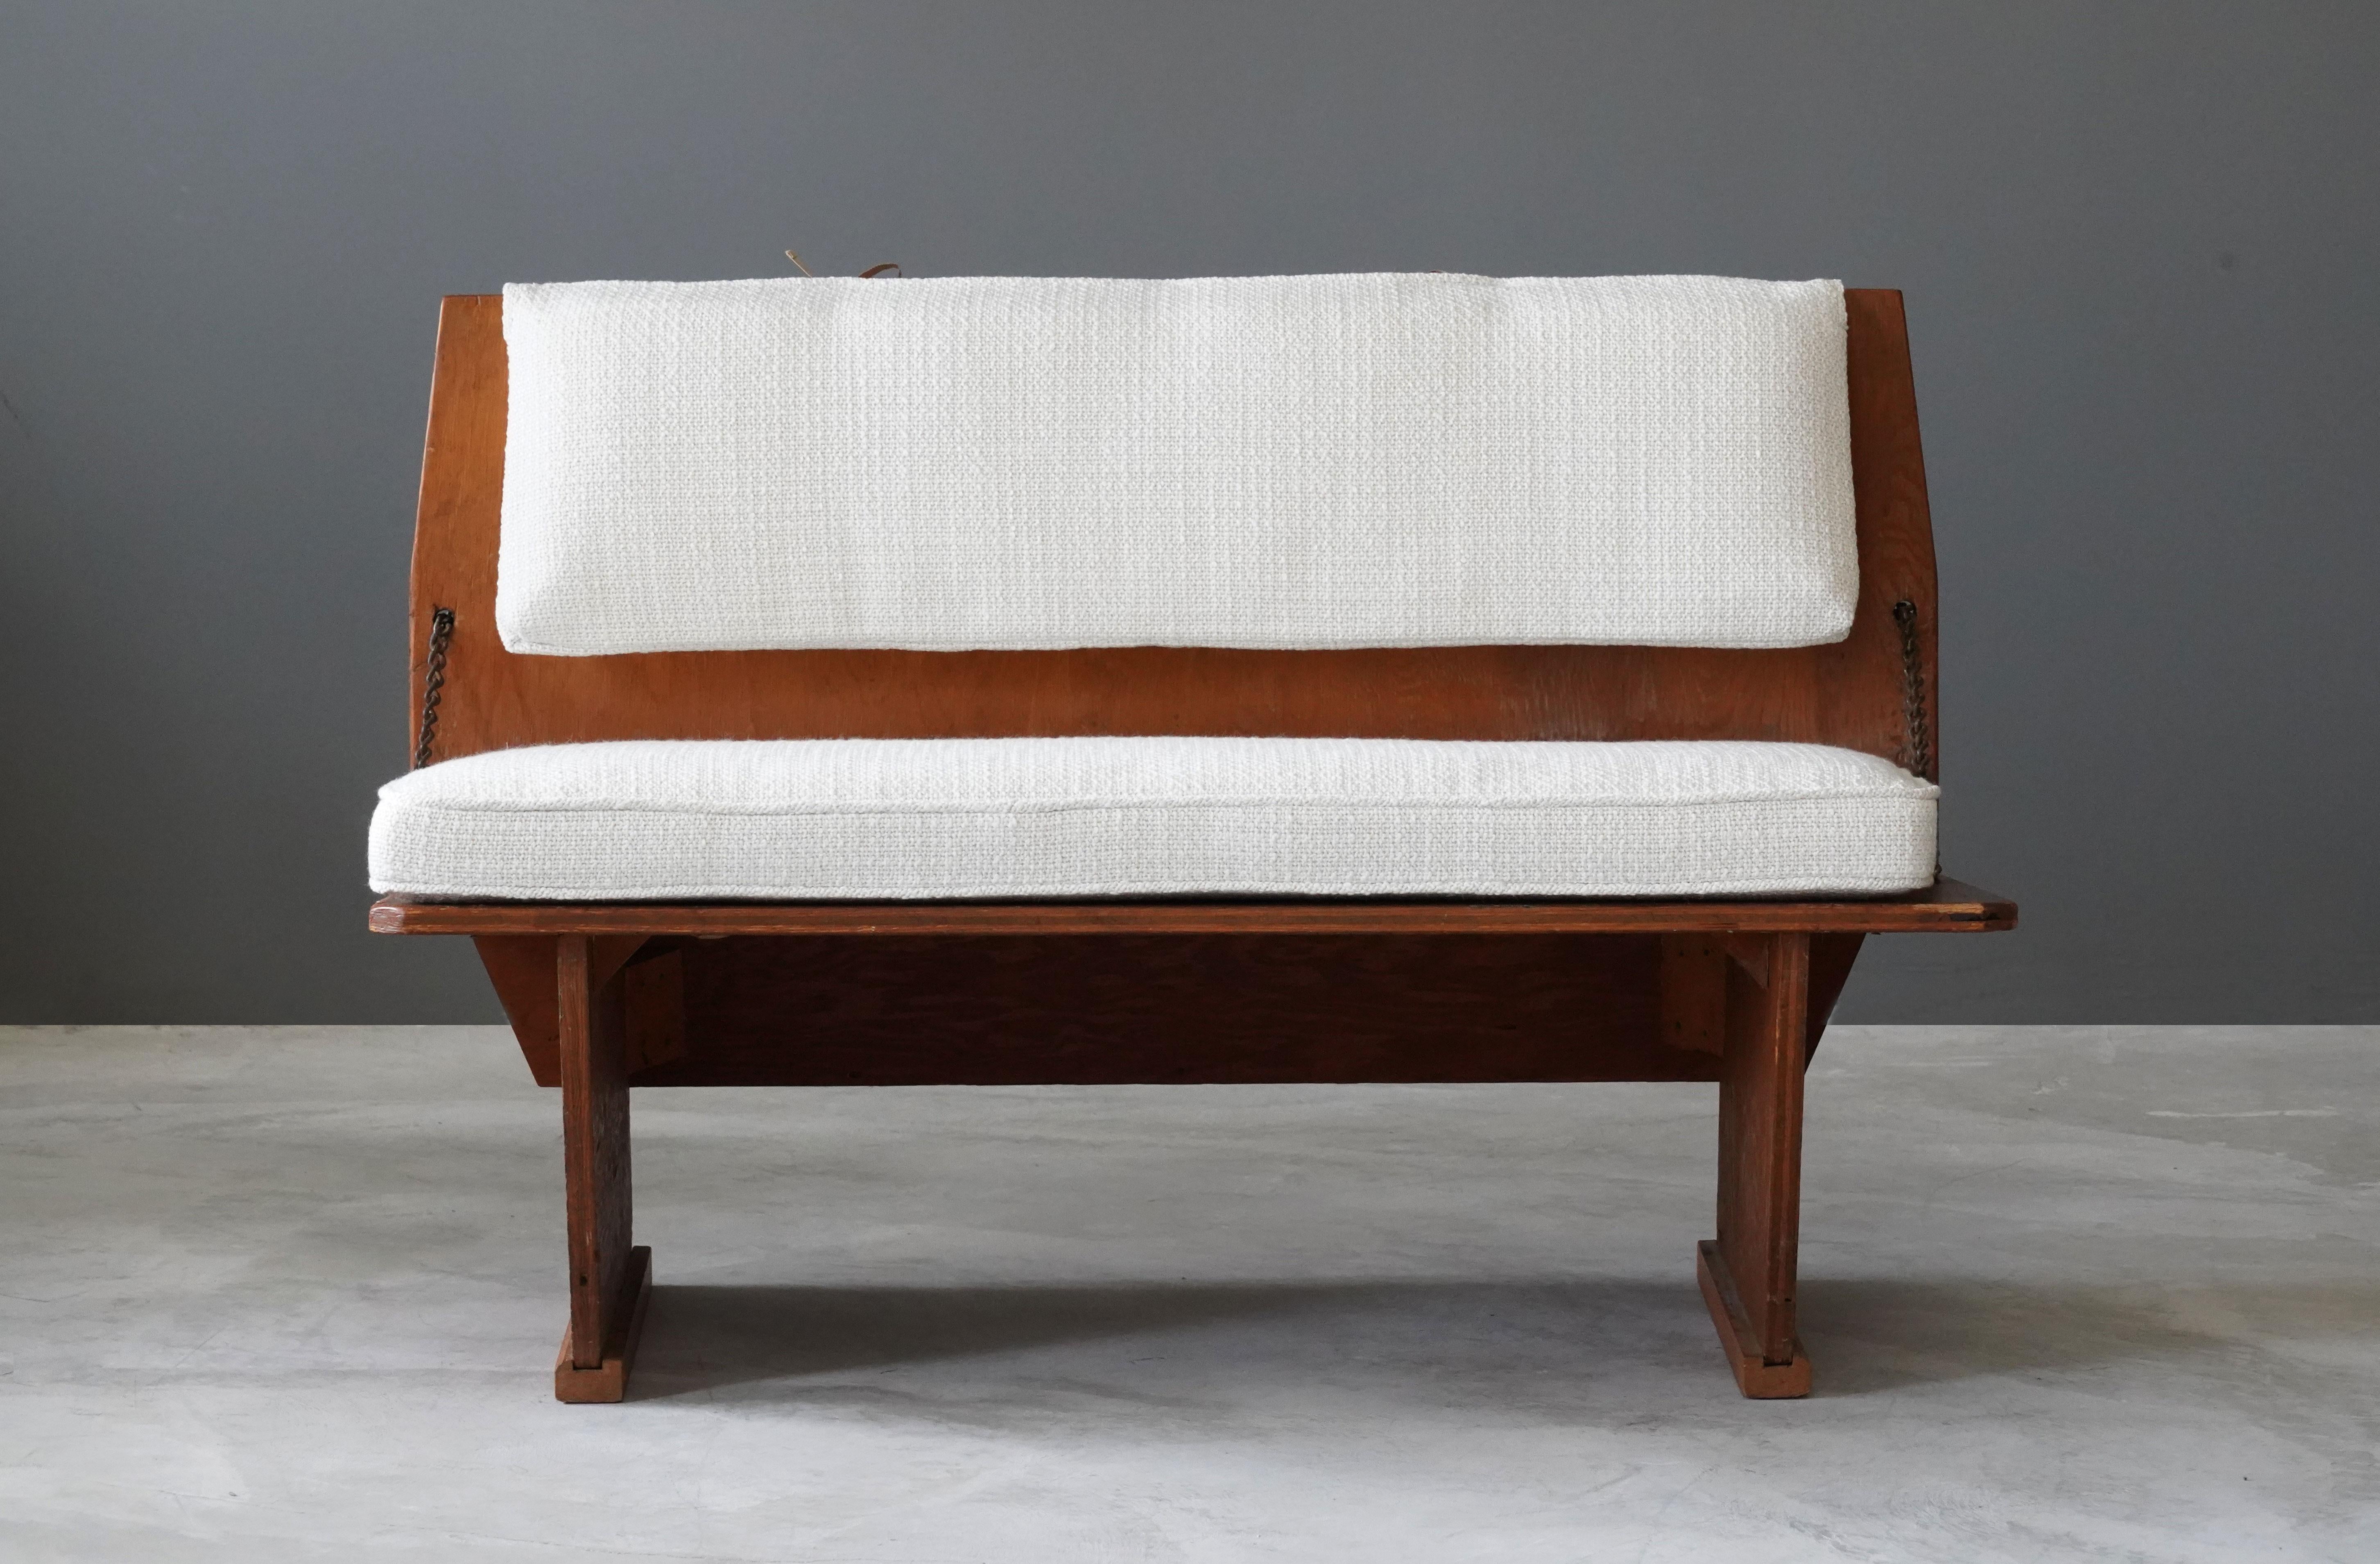 American Frank Lloyd Wright Bench from Unitarian Church, Pine Plywood, Steel, Fabric 1951